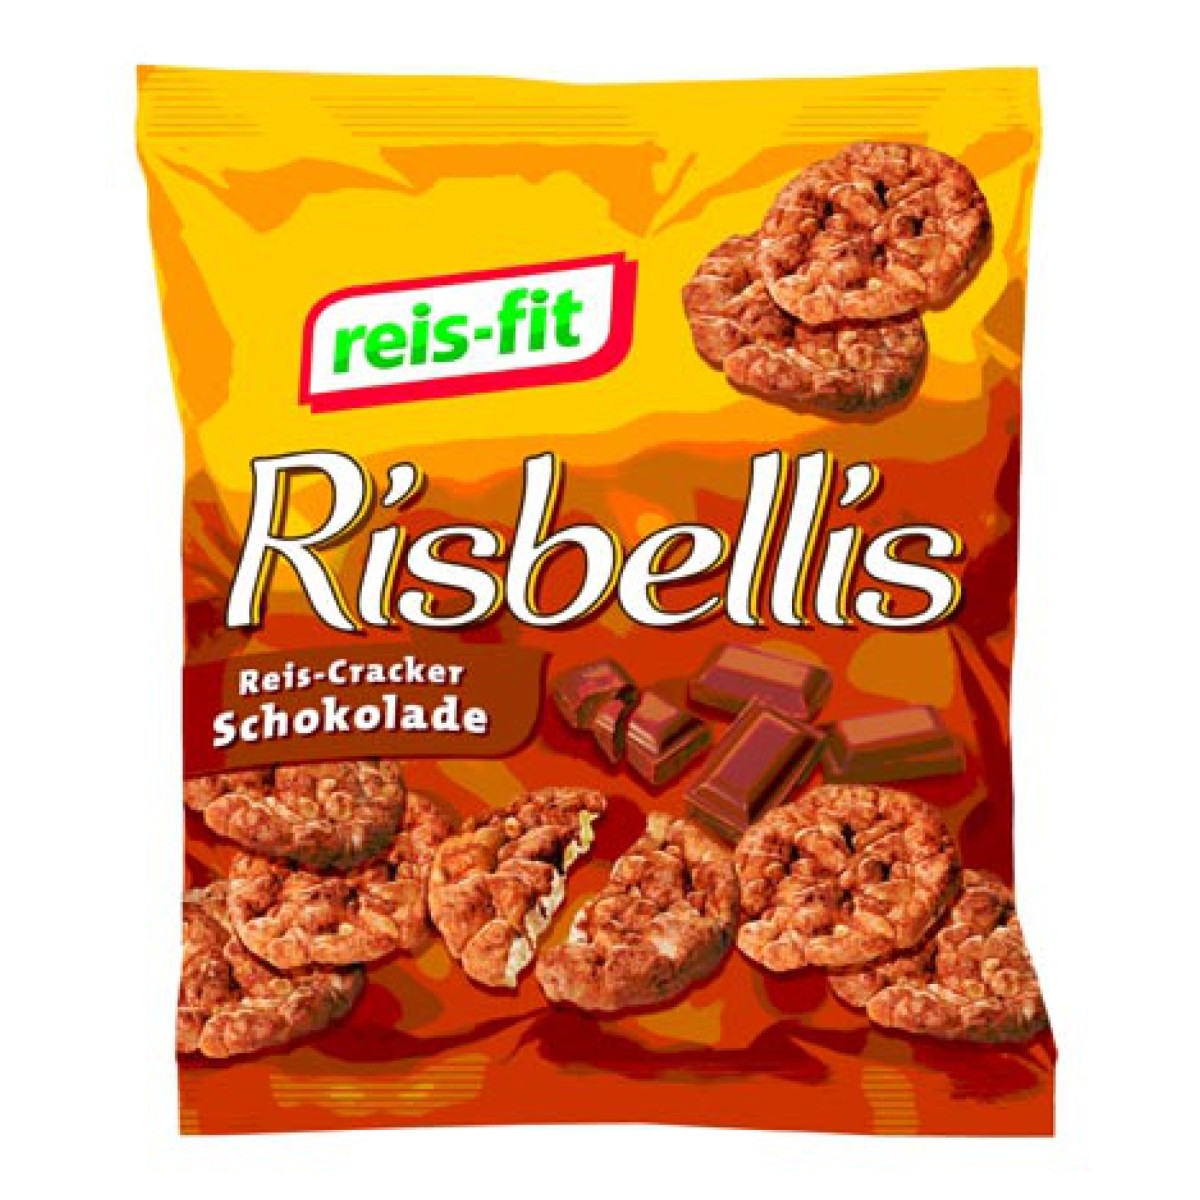 Barbecue REGAL reis-fit → Schokolade Reis-Cracker Risbellis und